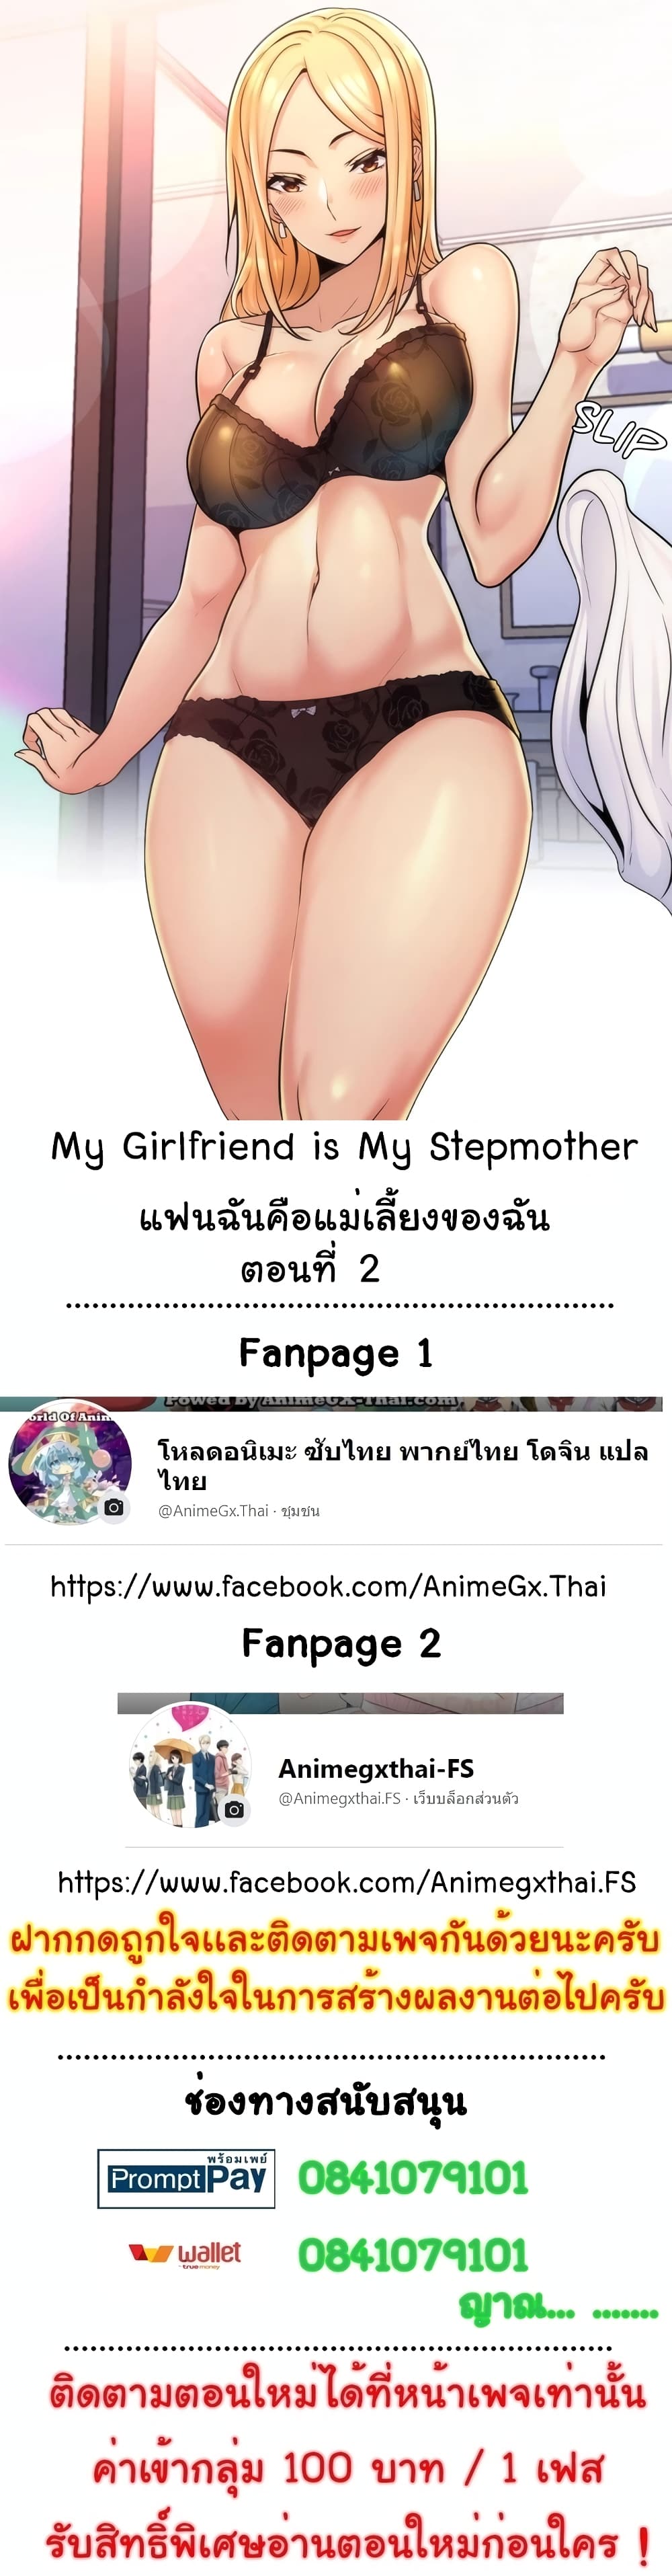 My Girlfriend is My Stepmother 2 01